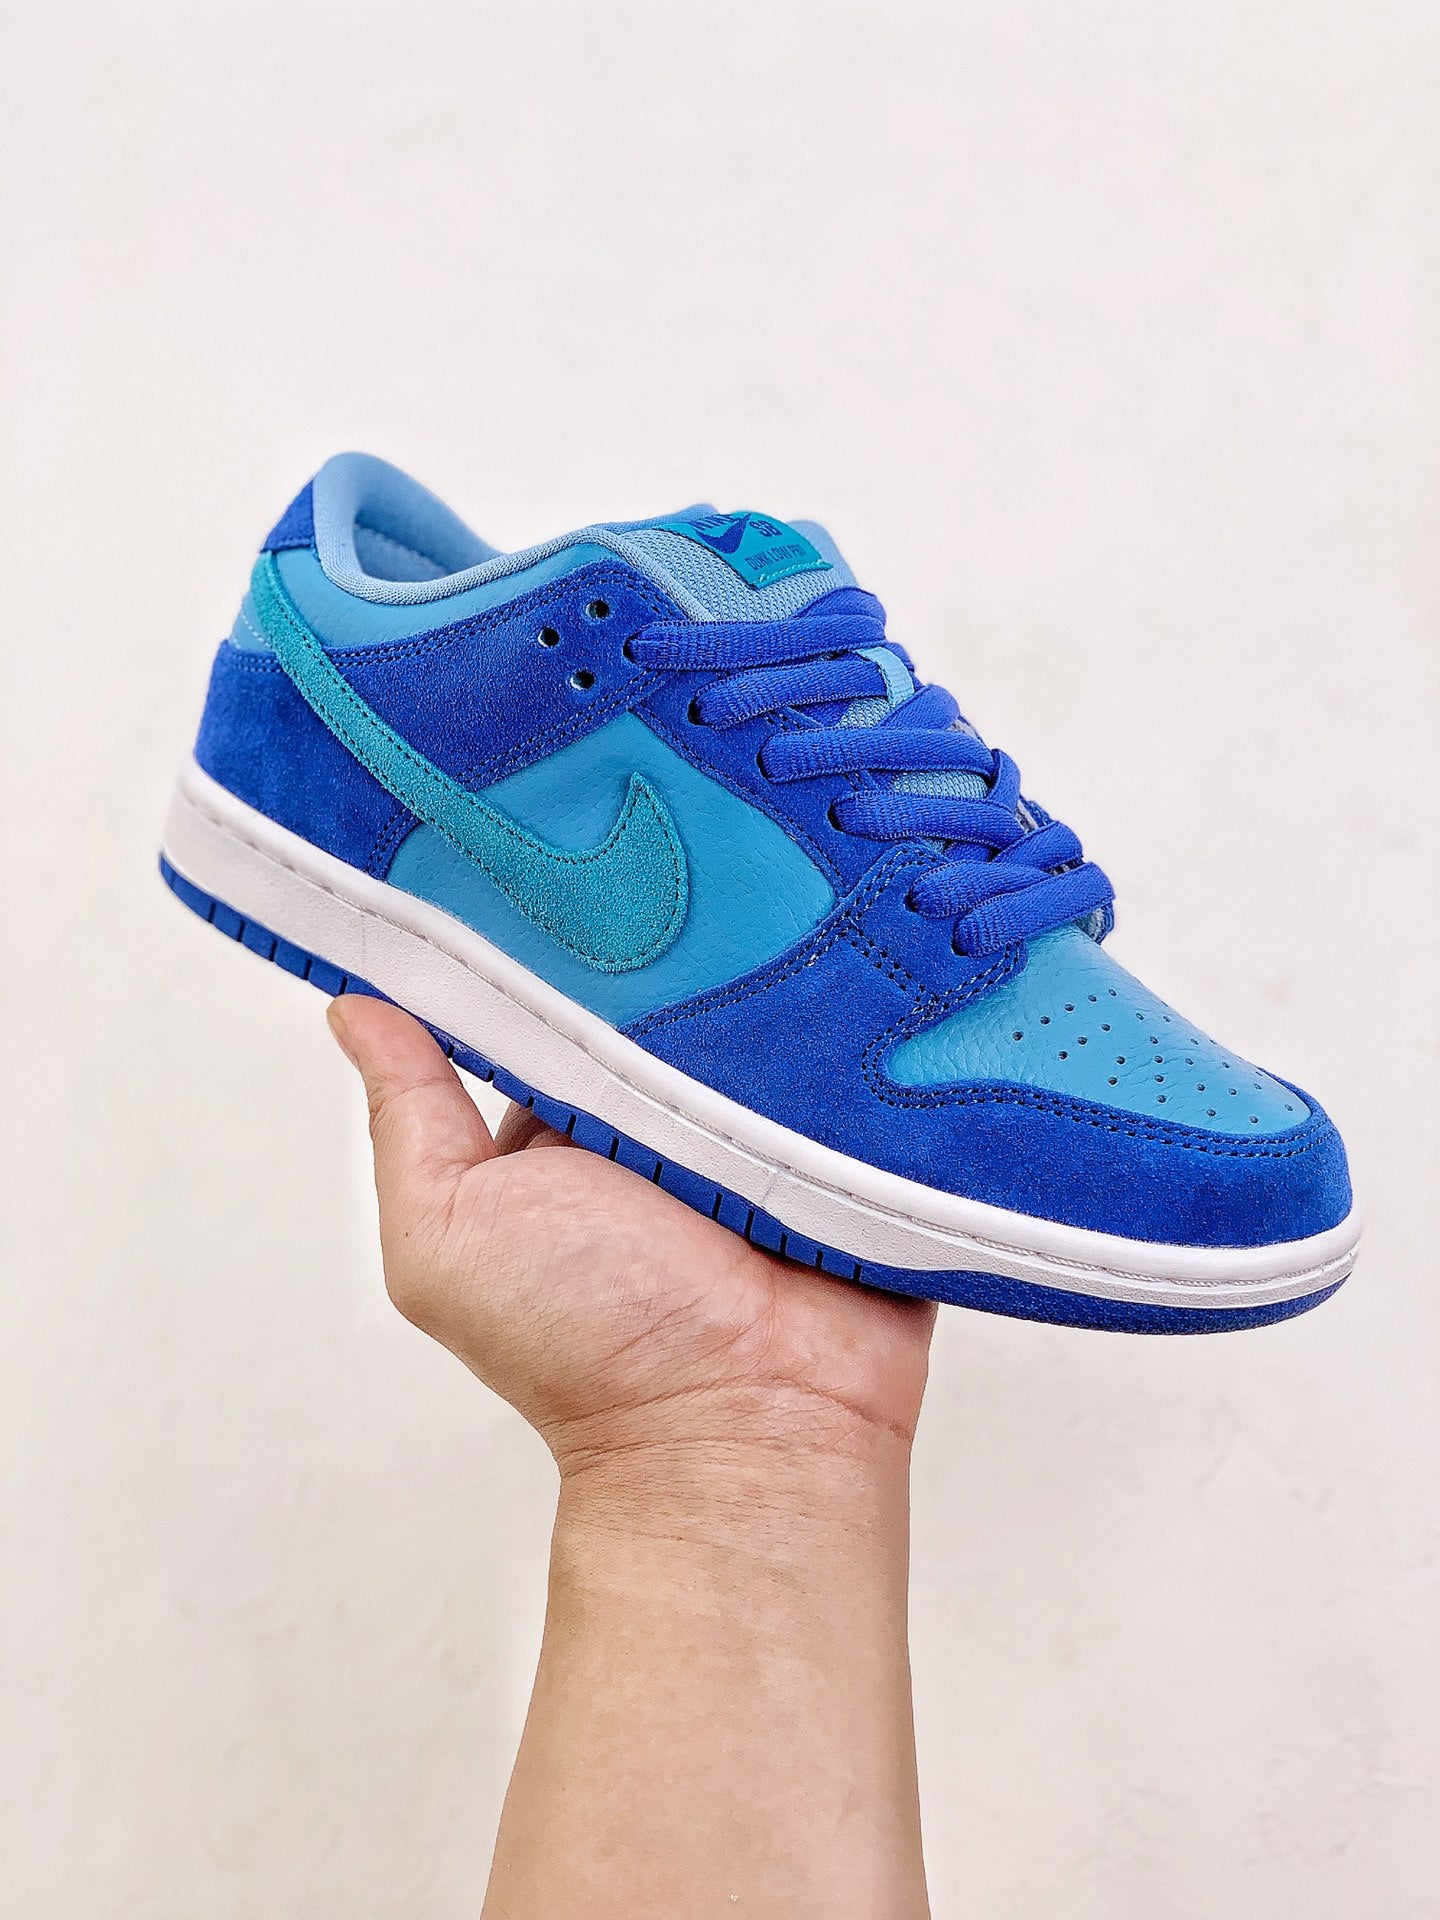 Nike SB Dunk Low  "Double blue "